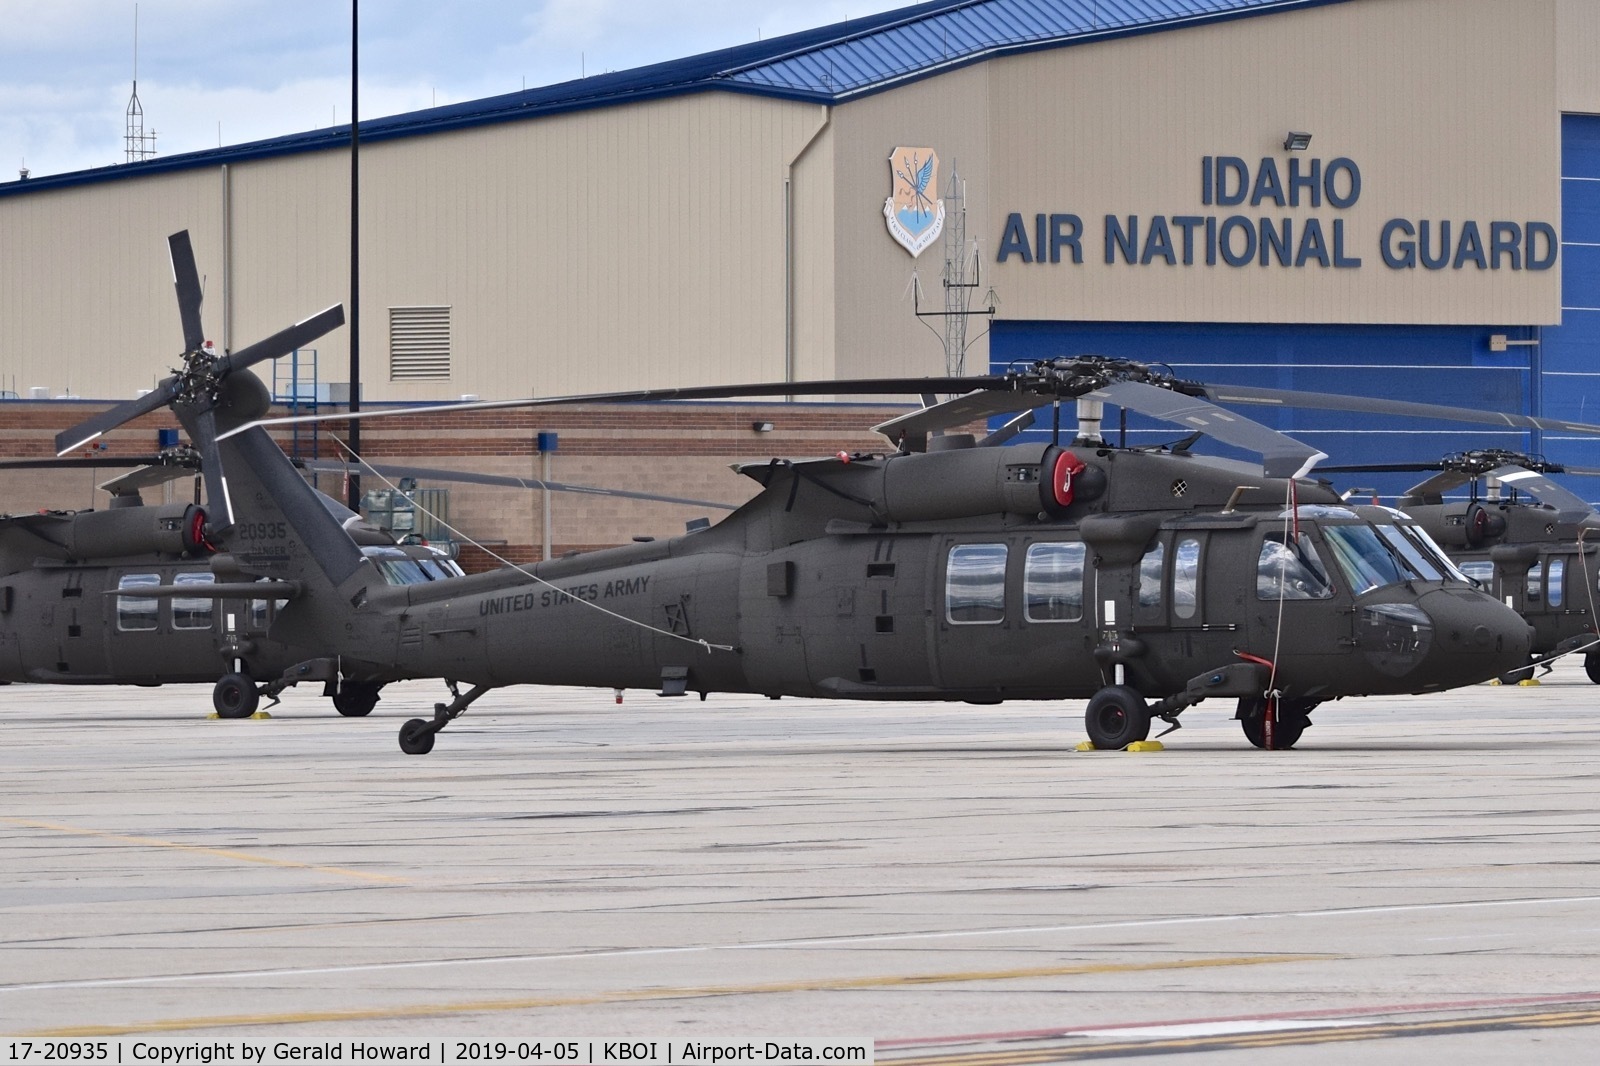 17-20935, 2017 Sikorsky UH-60M Black Hawk C/N unknown, Parked on the Idaho ANG ramp.